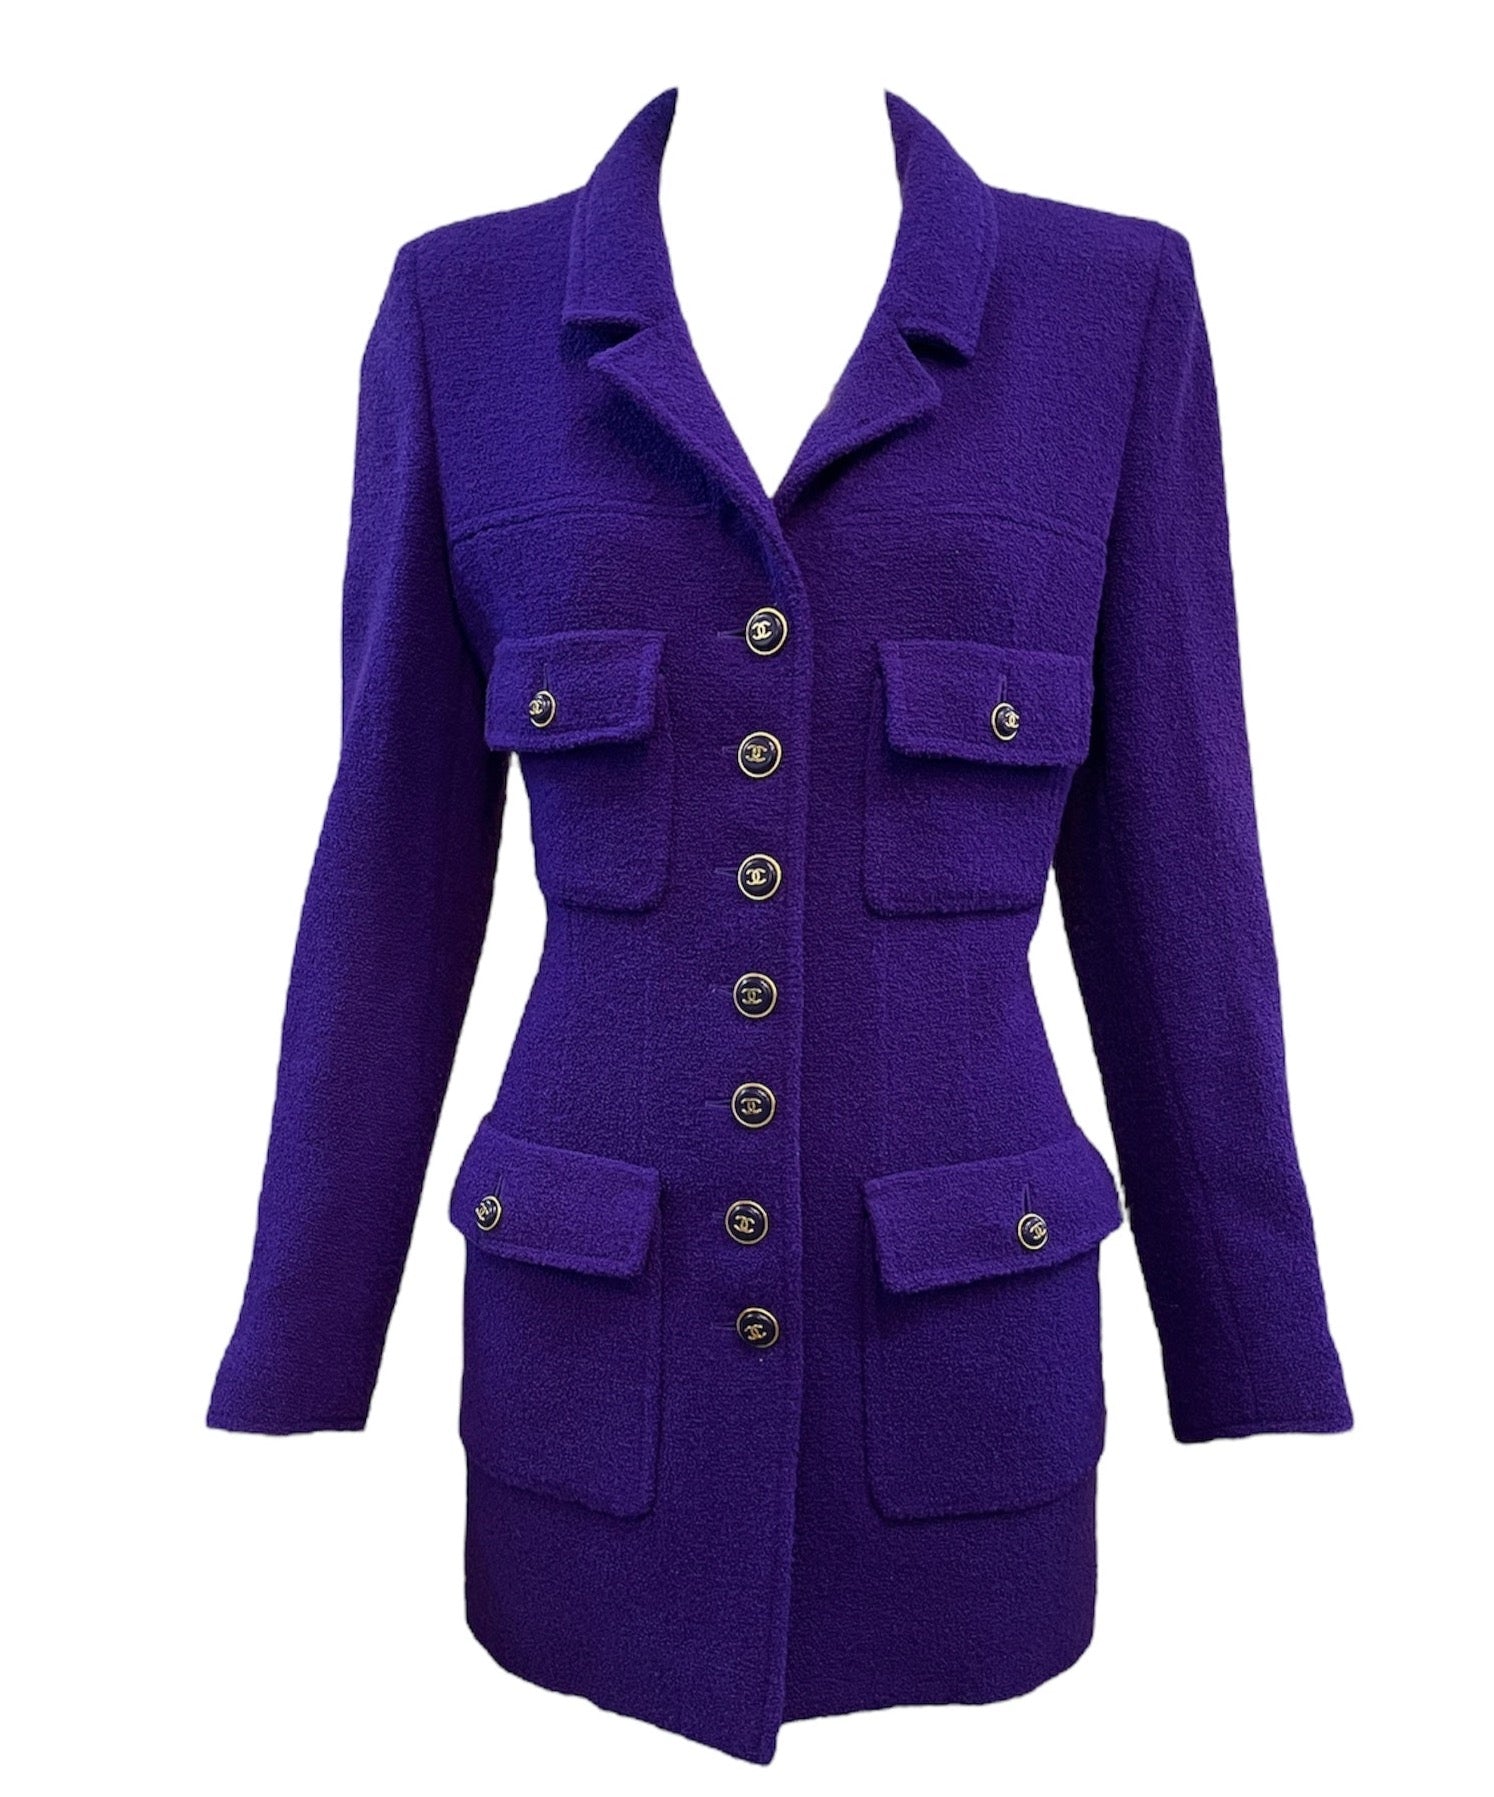  Chanel 2000s Purple Nubby Wool Skirt Suit JACKET 4 of 8